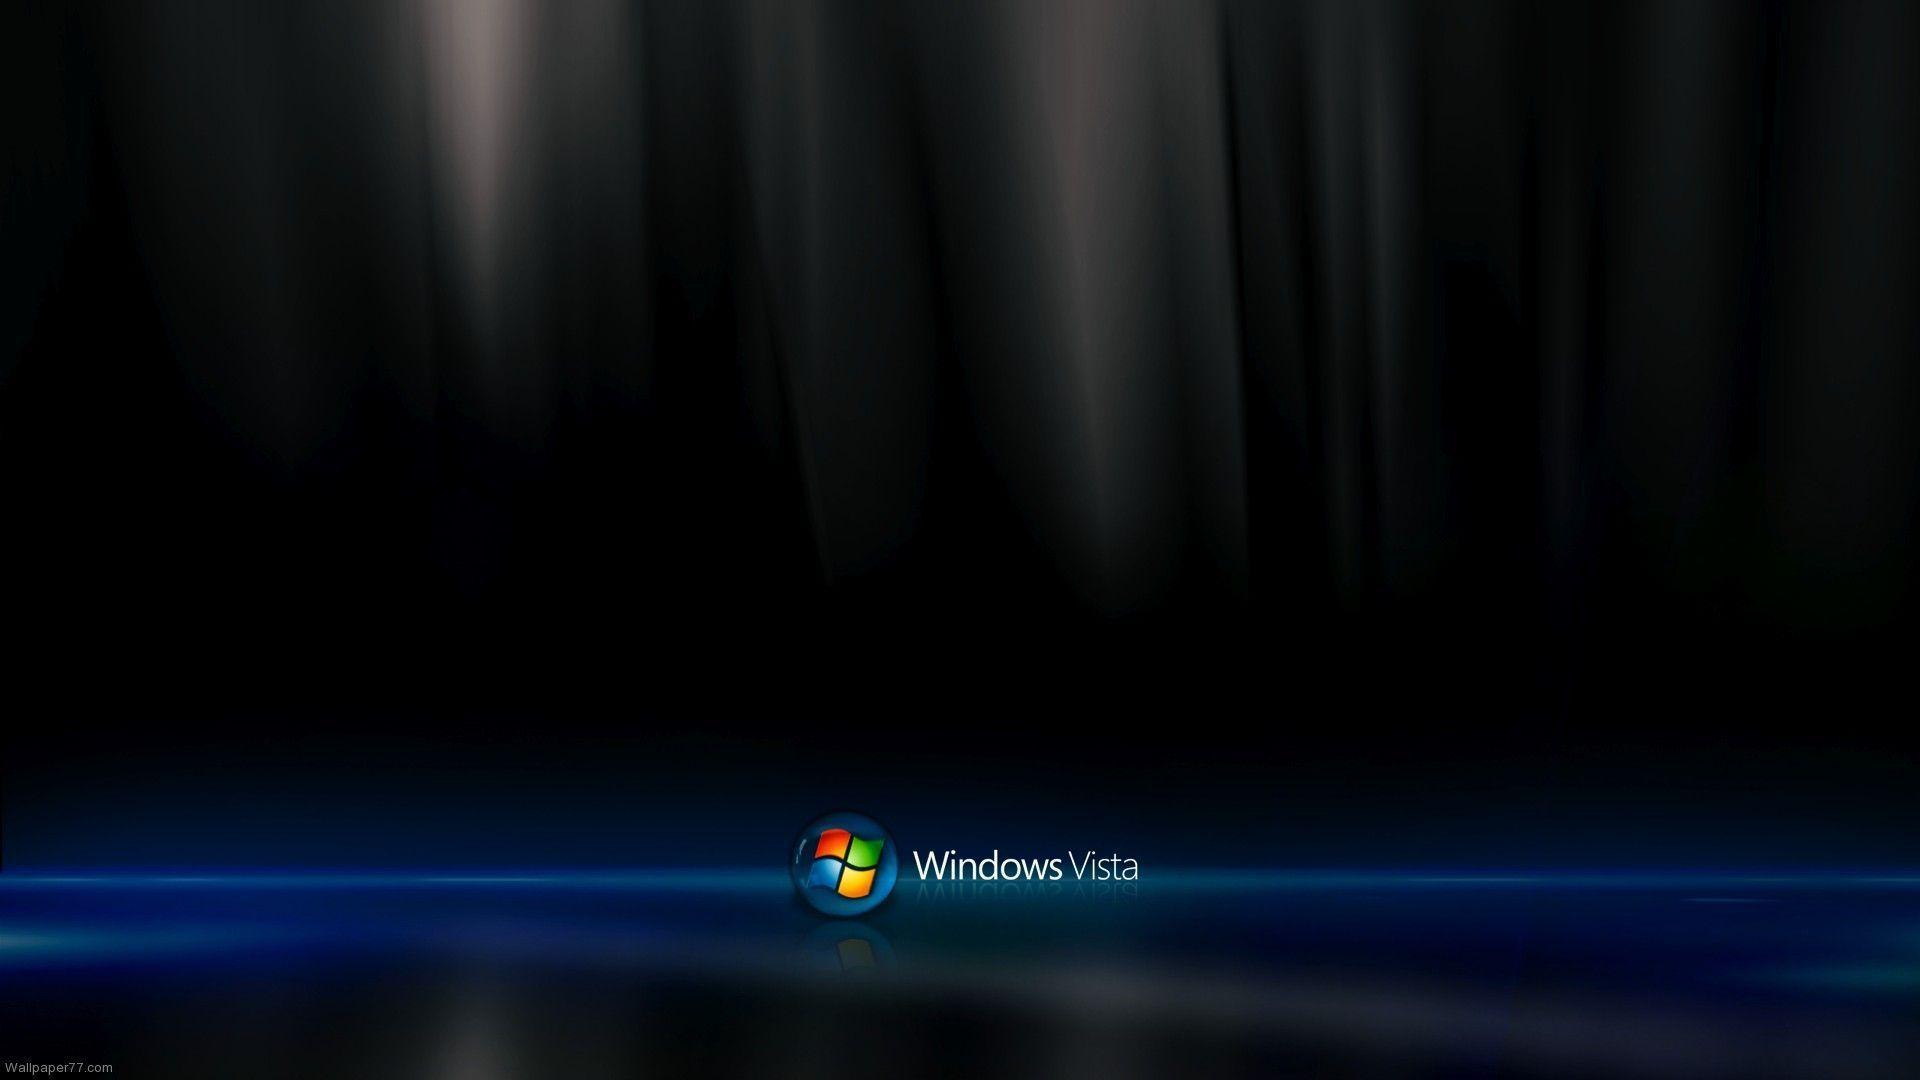 Windows Vista Ultimate Logo wallpaper. Colorful